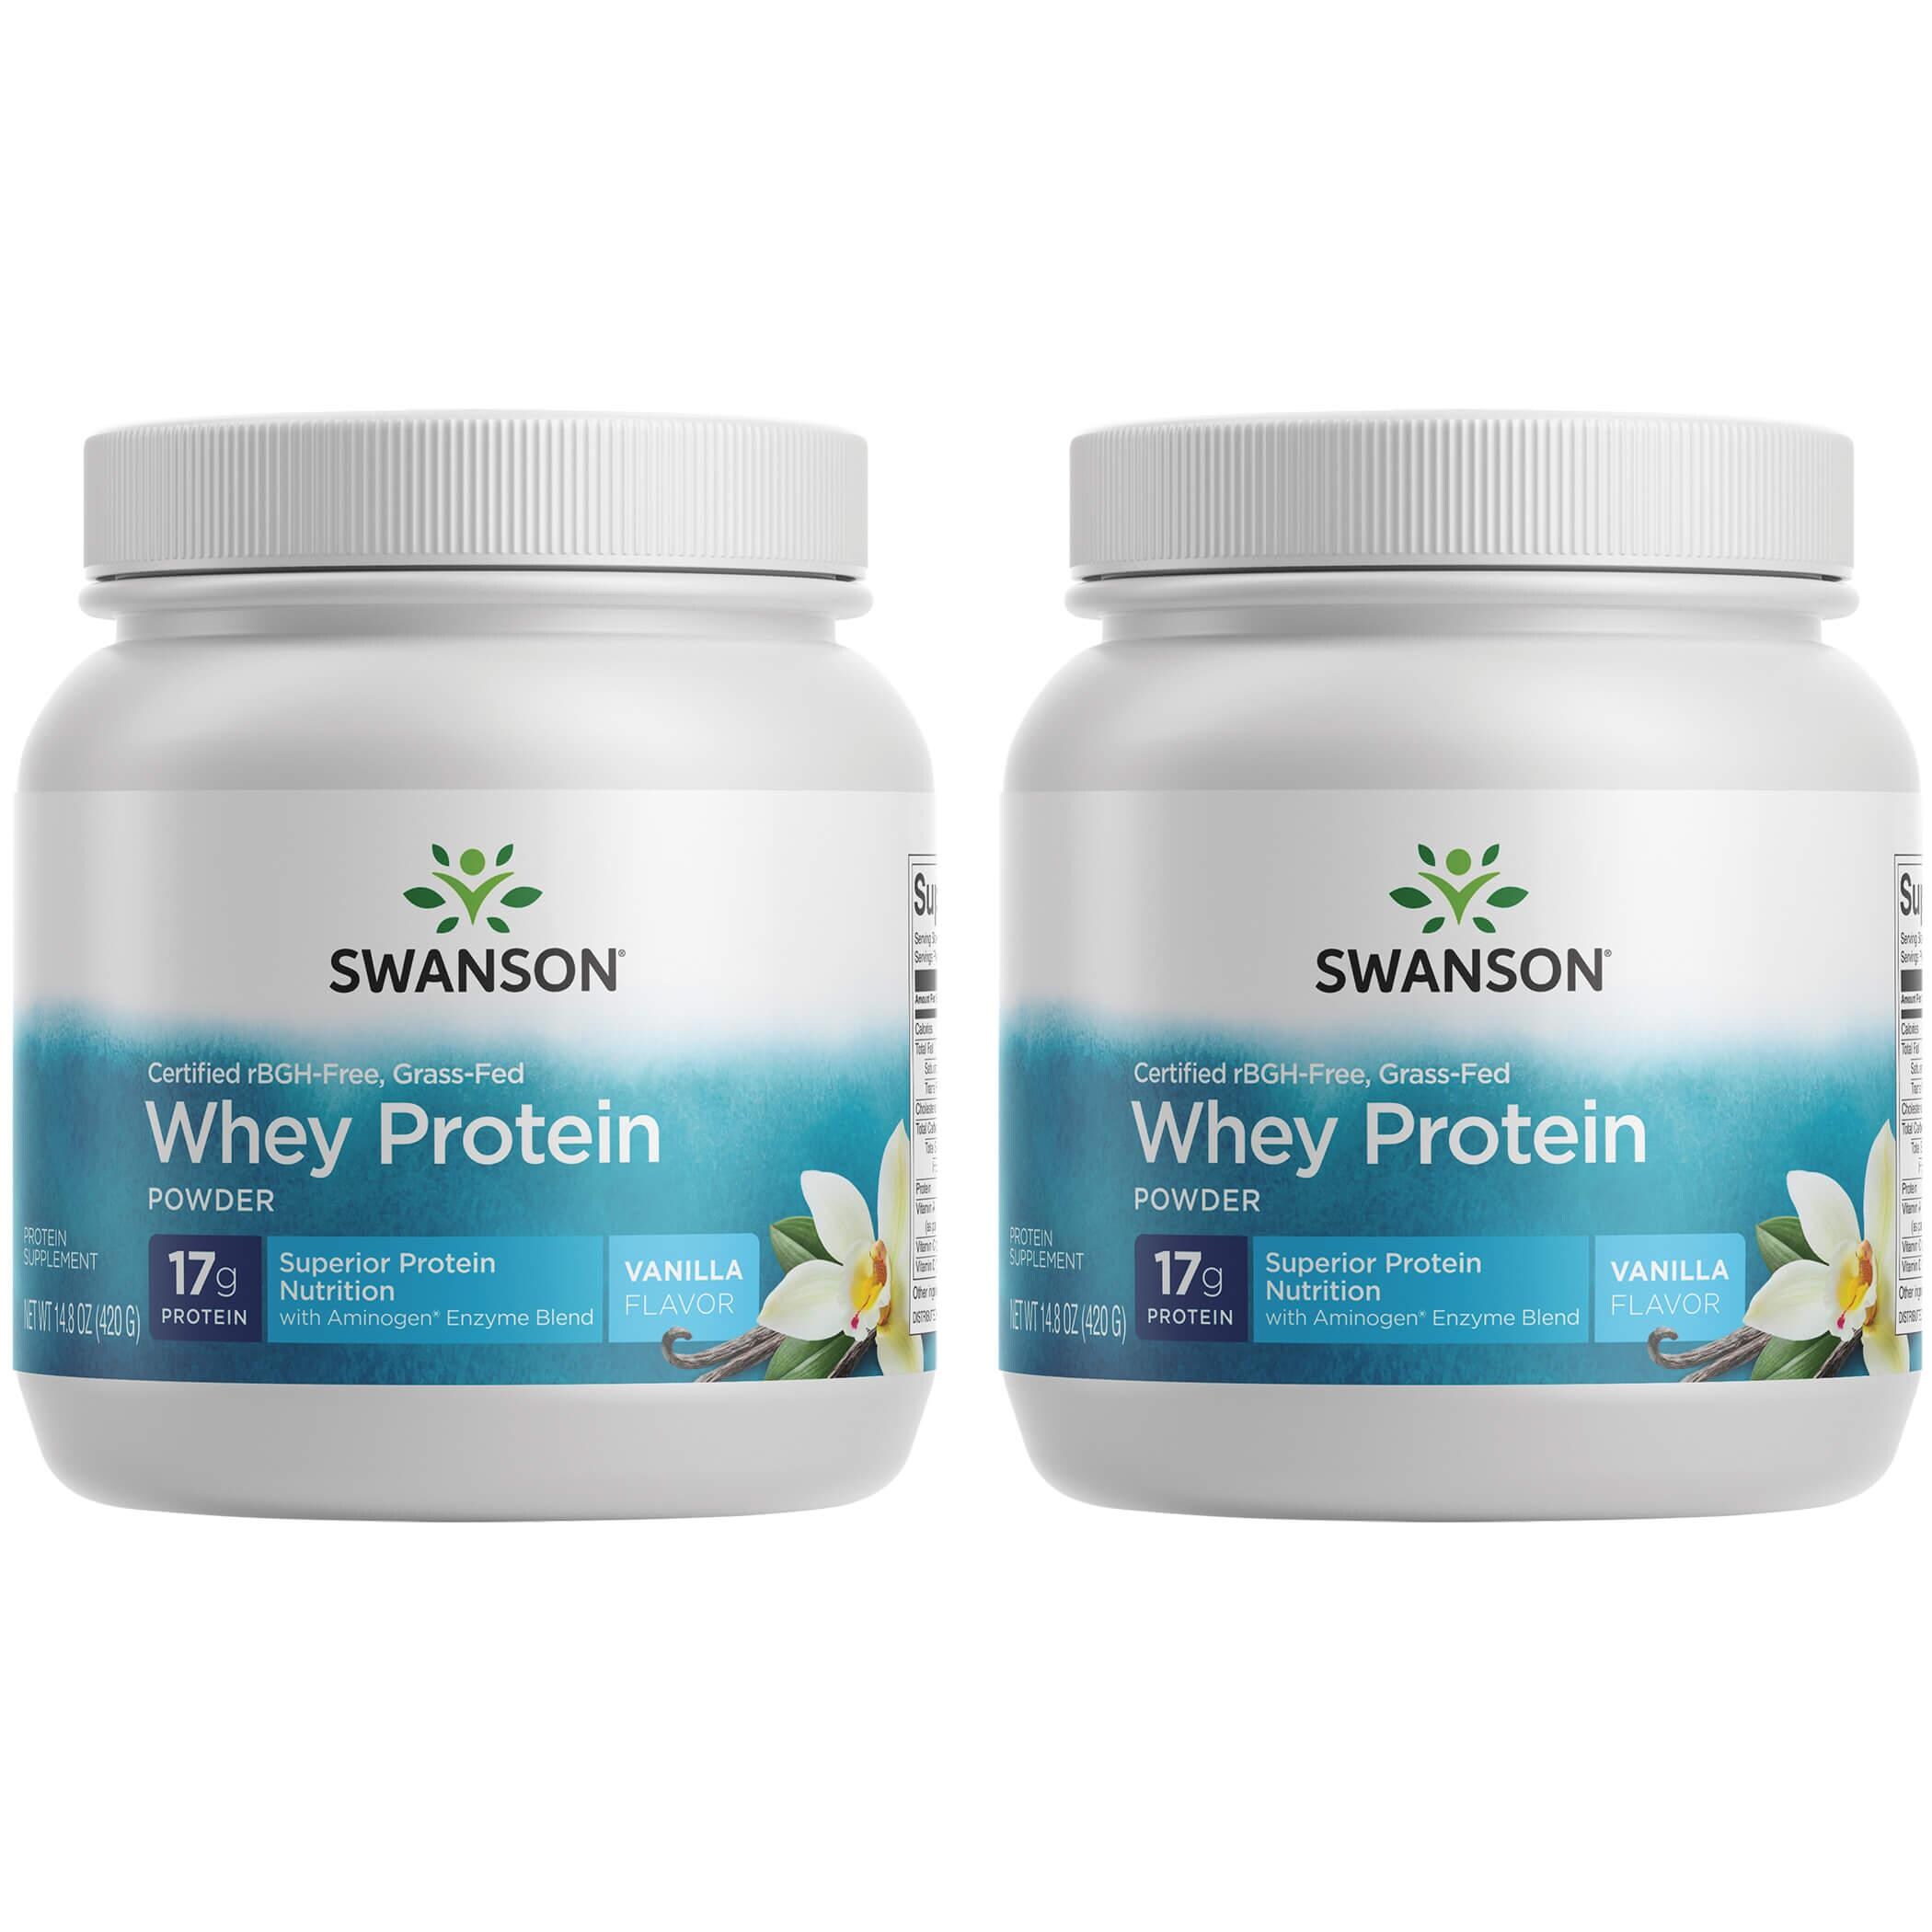 Swanson Ultra Certified rbgh-Free Grass-Fed Whey Protein Powder - Vanilla 2 Pack 14.8 oz Powder